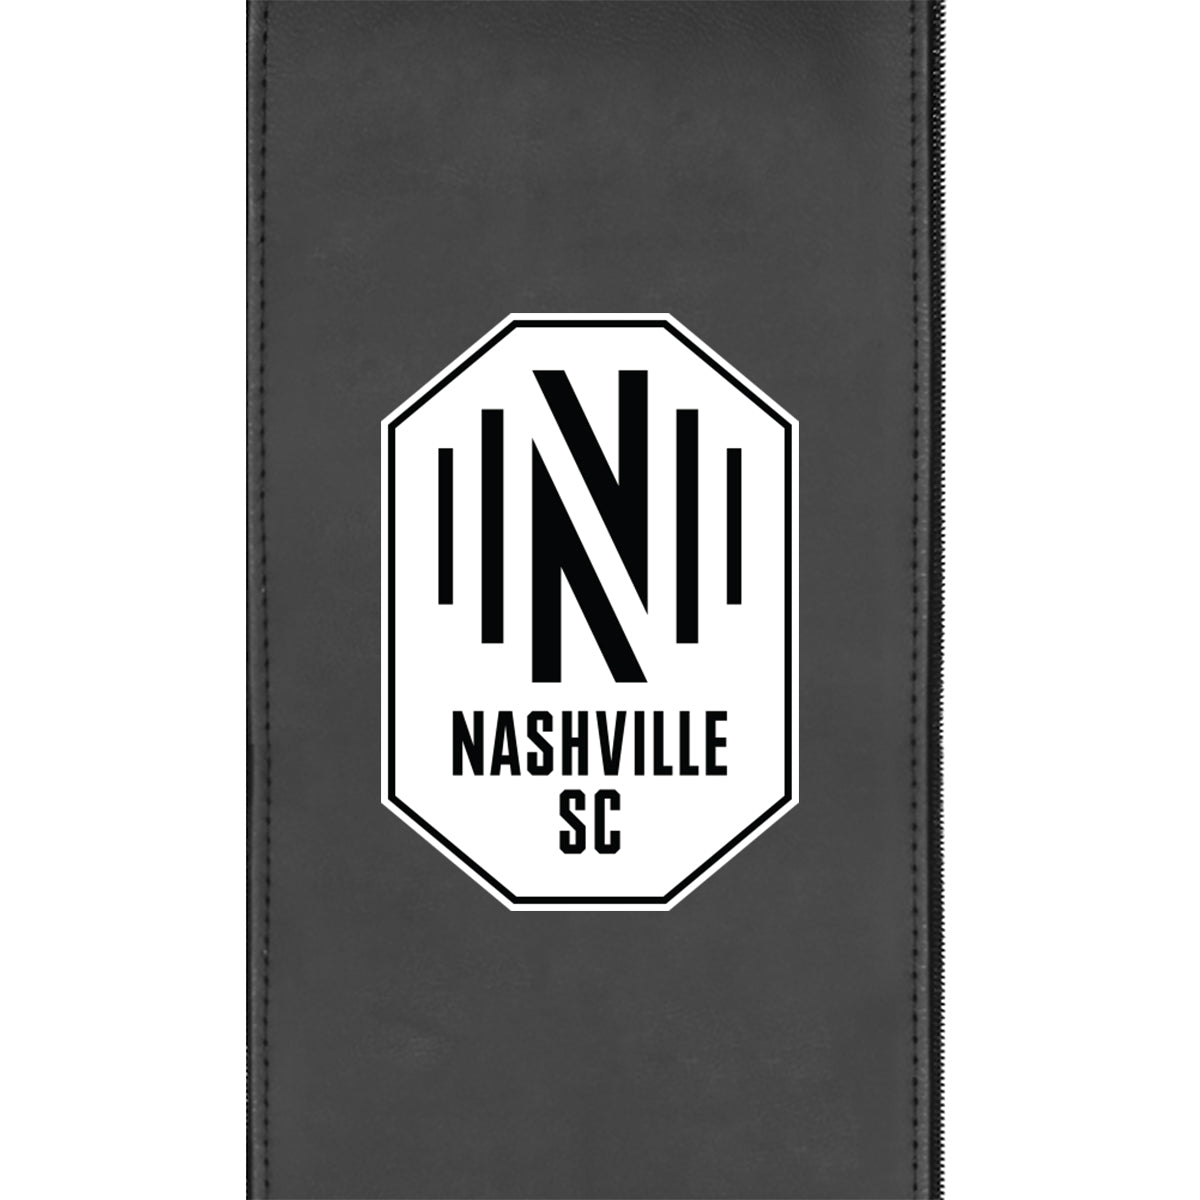 Curve Task Chair with Nashville SC Alternate Logo